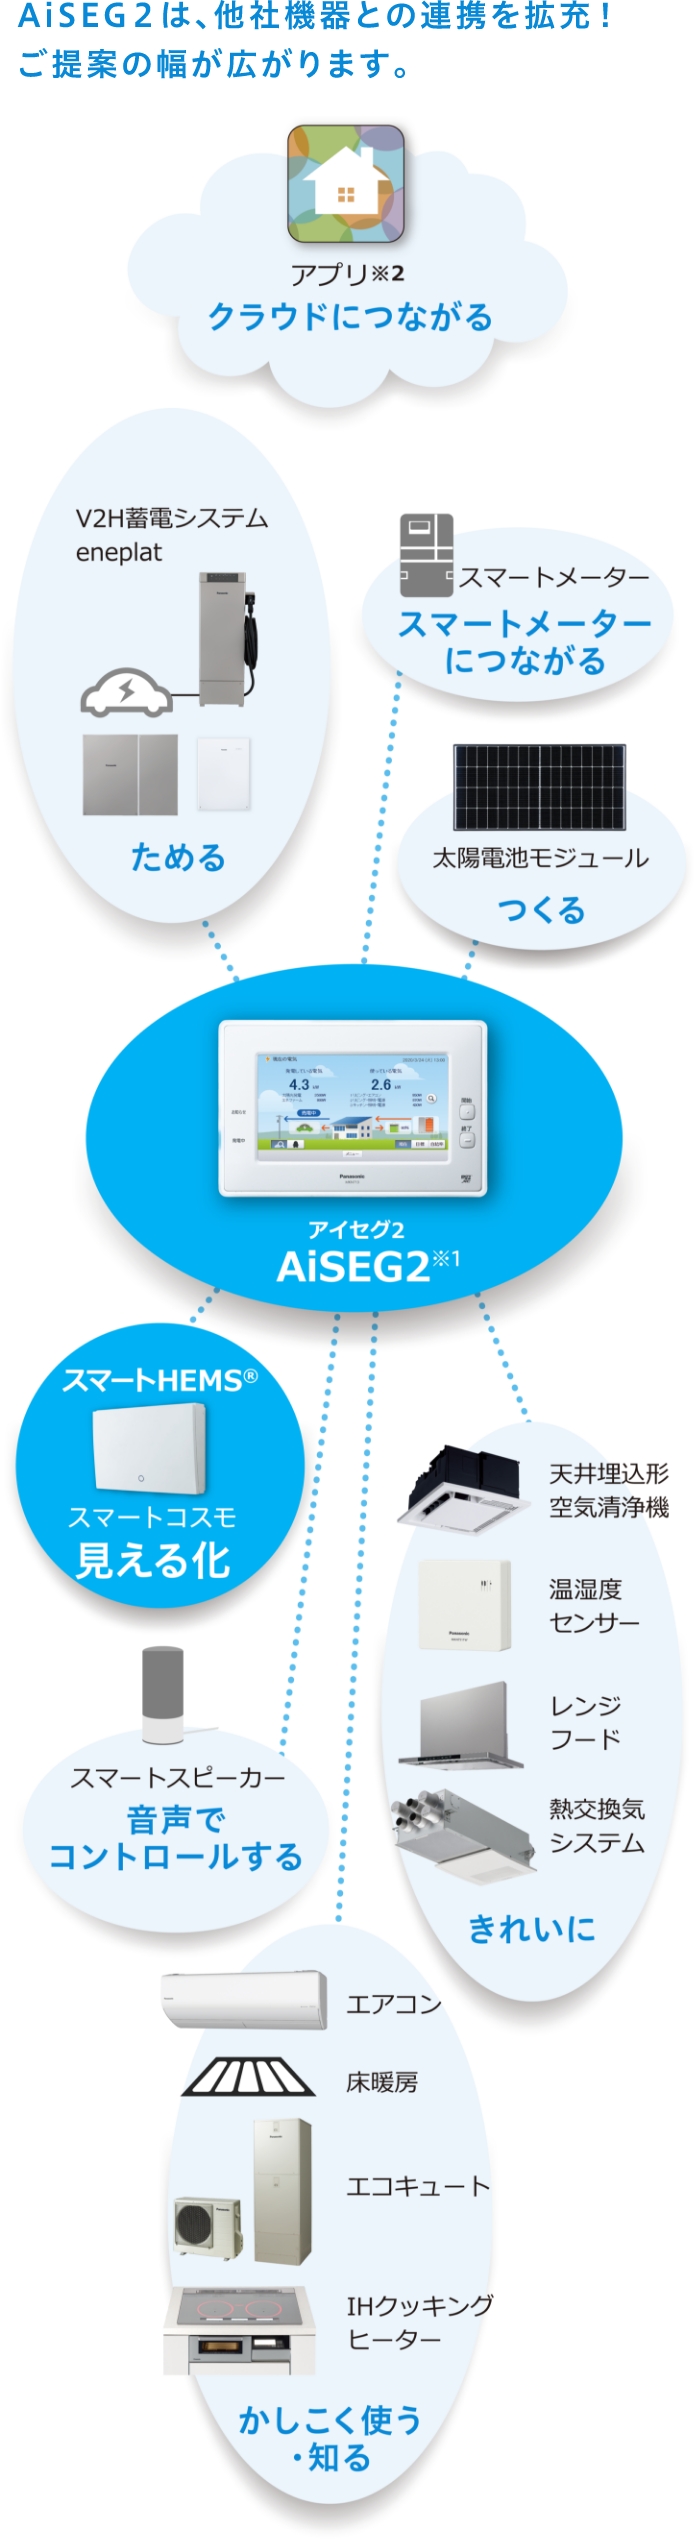 AiSEG2は、他社機器との連携を拡充！ご提案の幅が広がります。